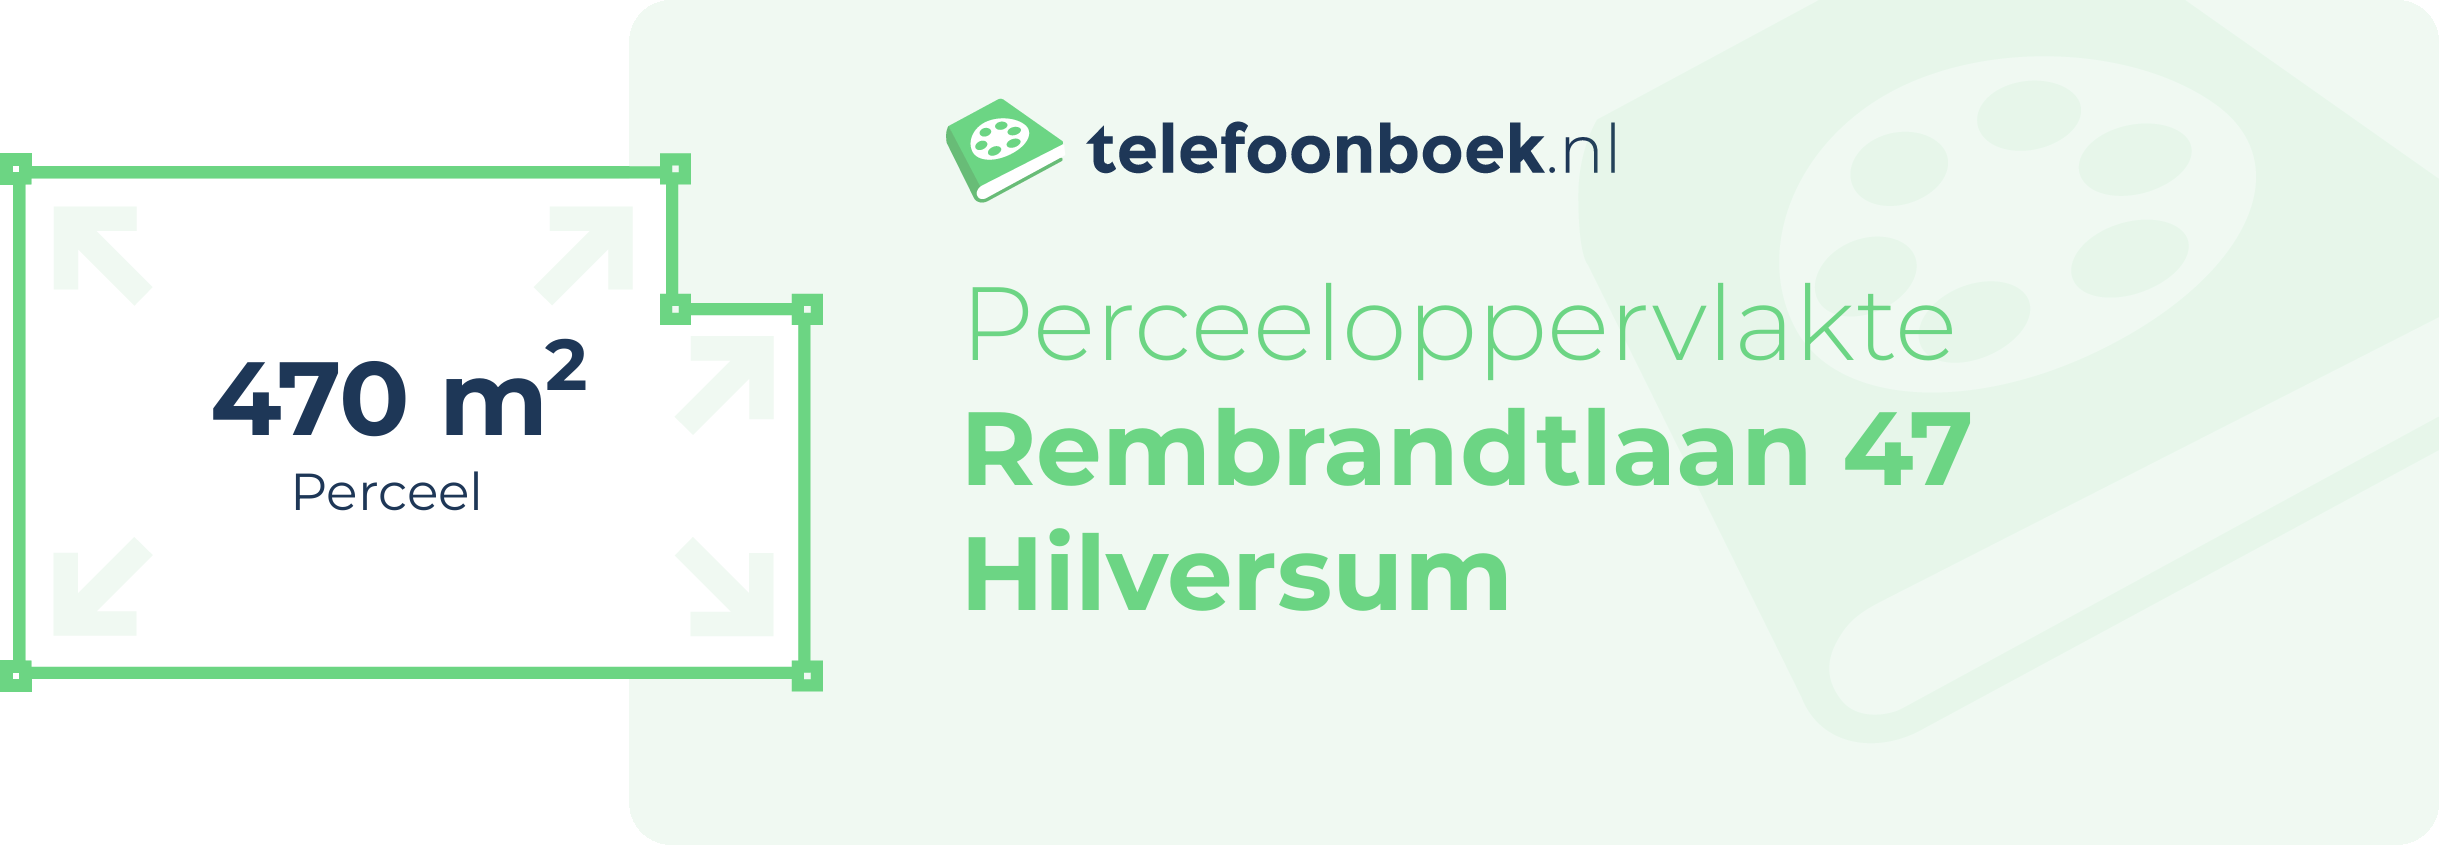 Perceeloppervlakte Rembrandtlaan 47 Hilversum